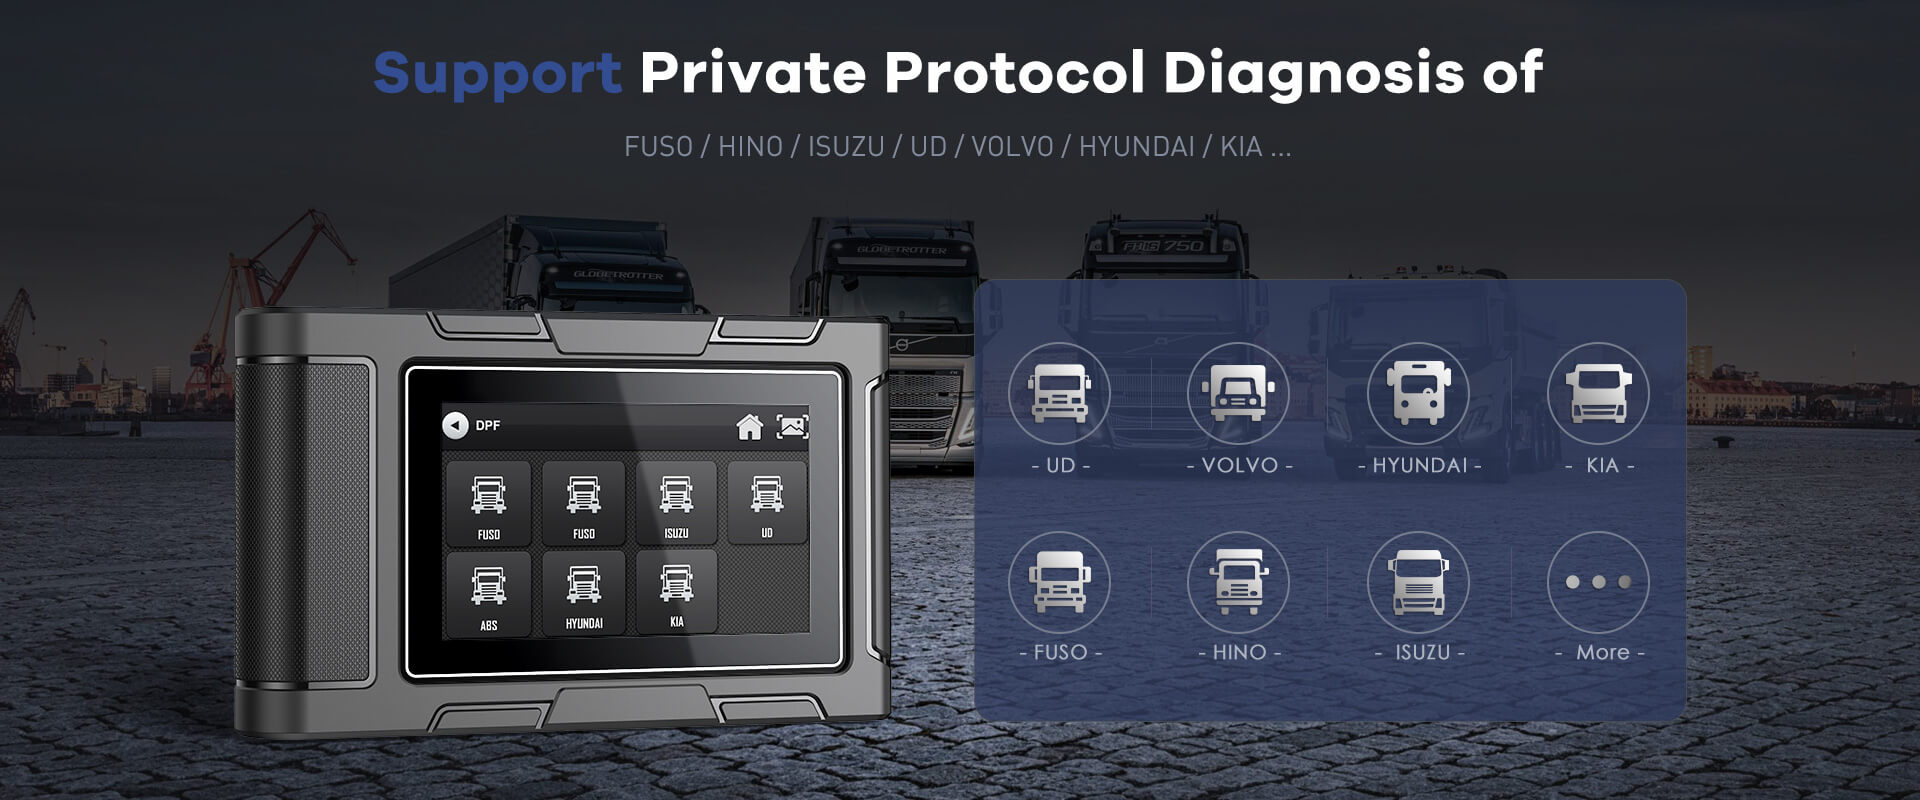 Support Private Protocol Diagnosis of Asian Trucks